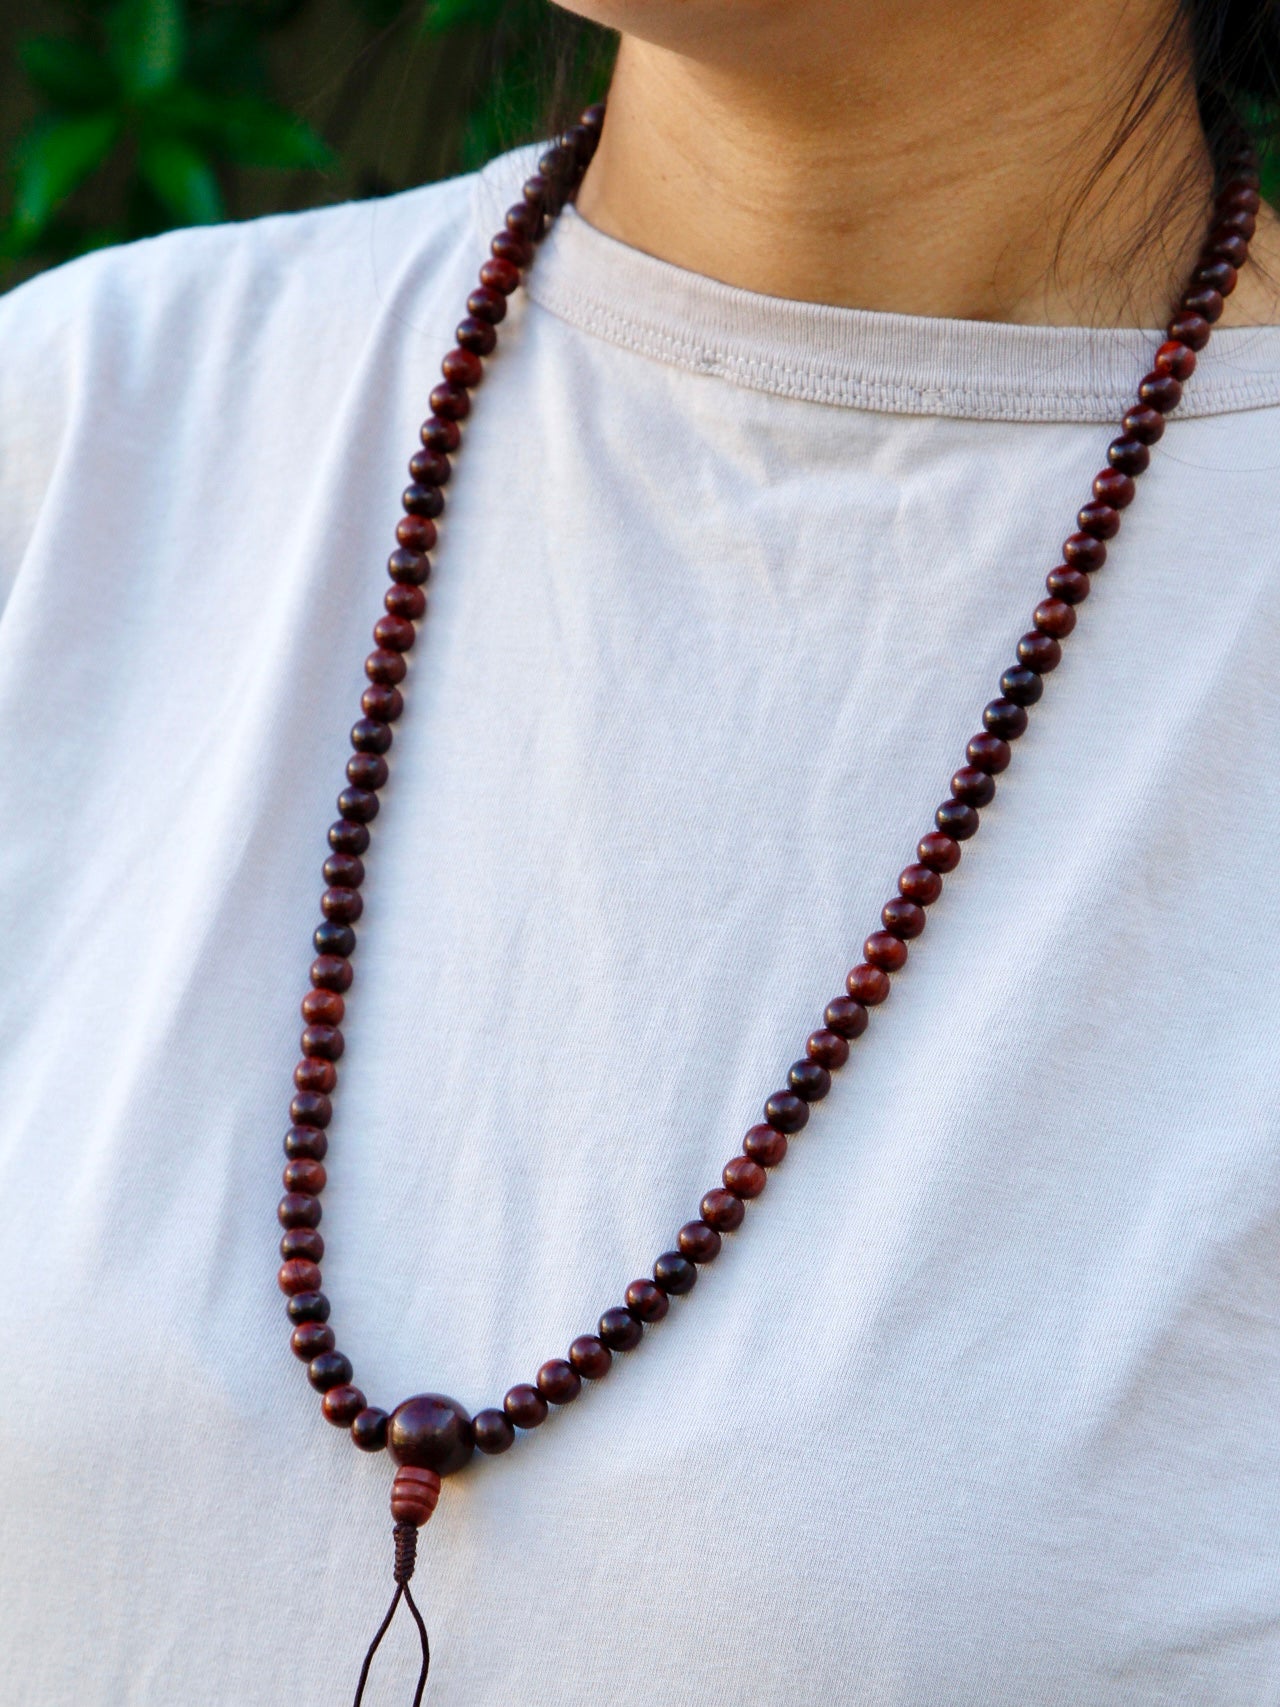 Portrait mode photo with rosewood mala beads worn around neck